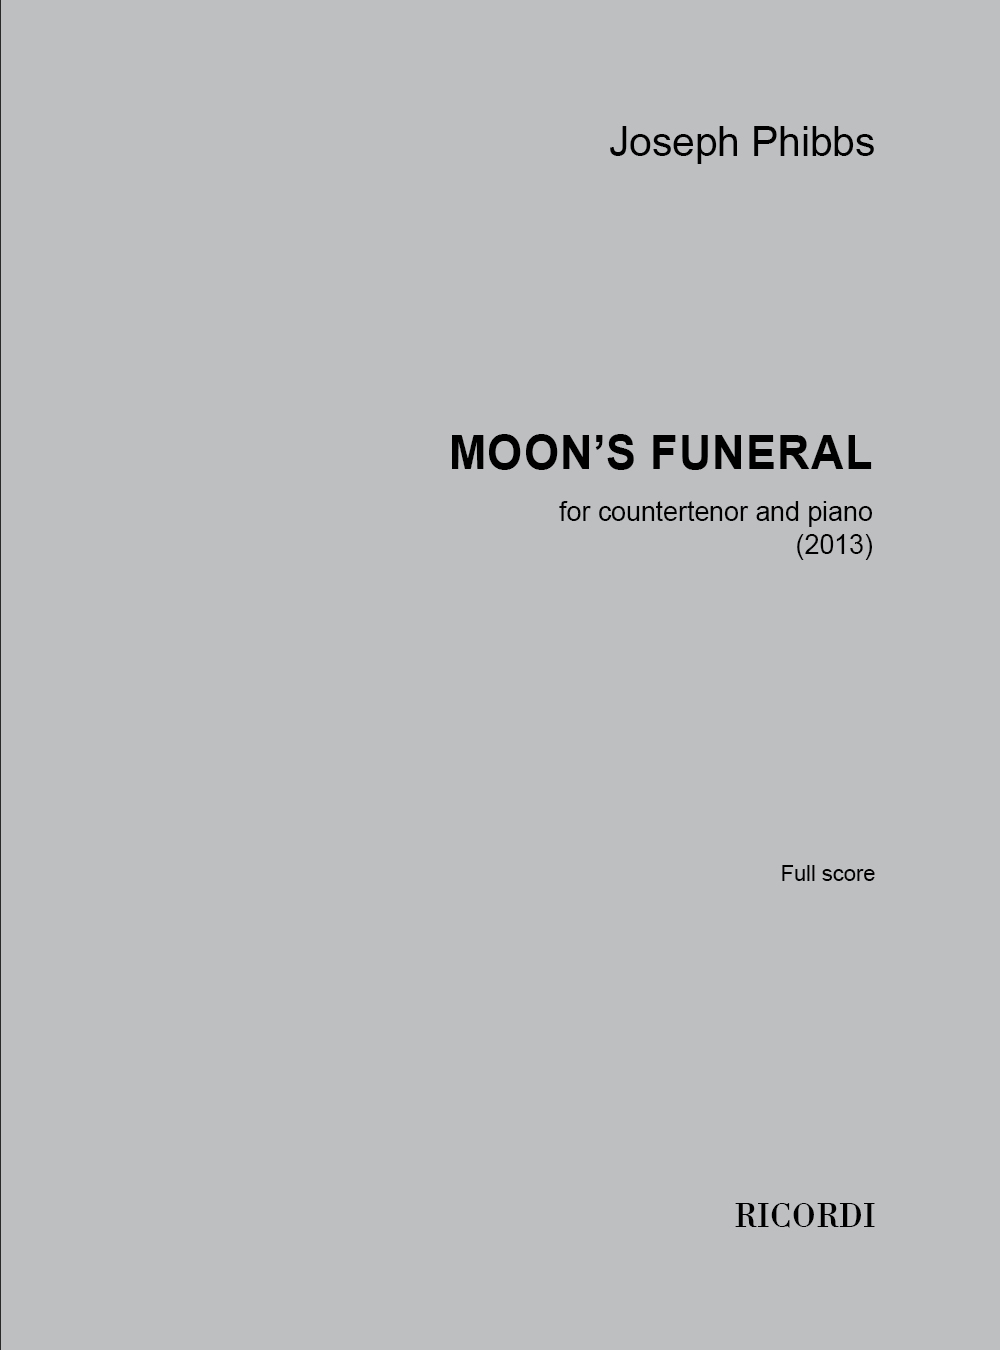 Joseph Phibbs: The Moon's Funeral: Countertenor: Vocal Work